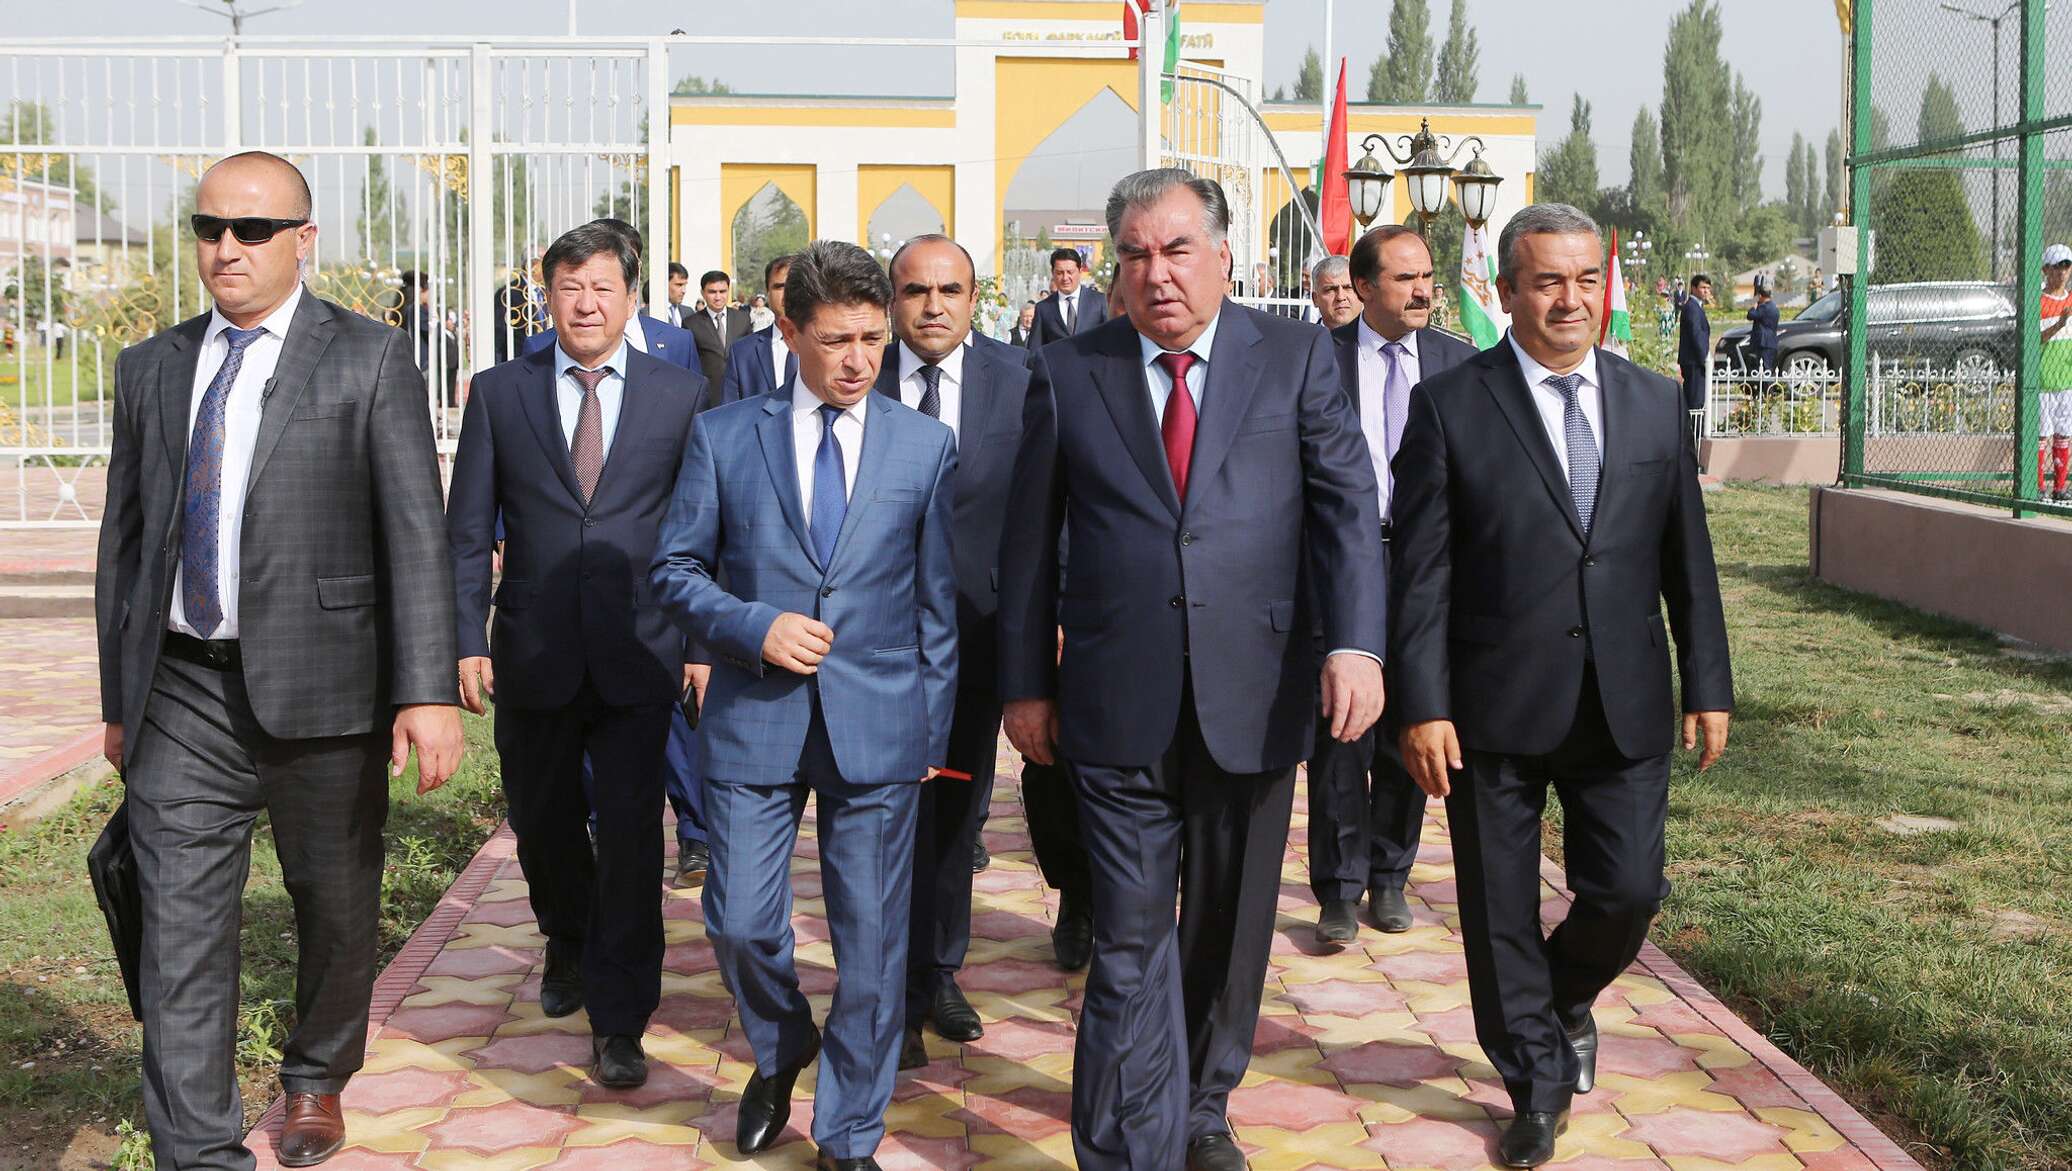 Точикистон хатлон. Эмомали Рахмон. Охрана президента Таджикистана Эмомали Рахмон. Охрана президента Таджикистана Мурод Саидов. Охрана президента Таджикистана Эмомали Рахмон 2010.